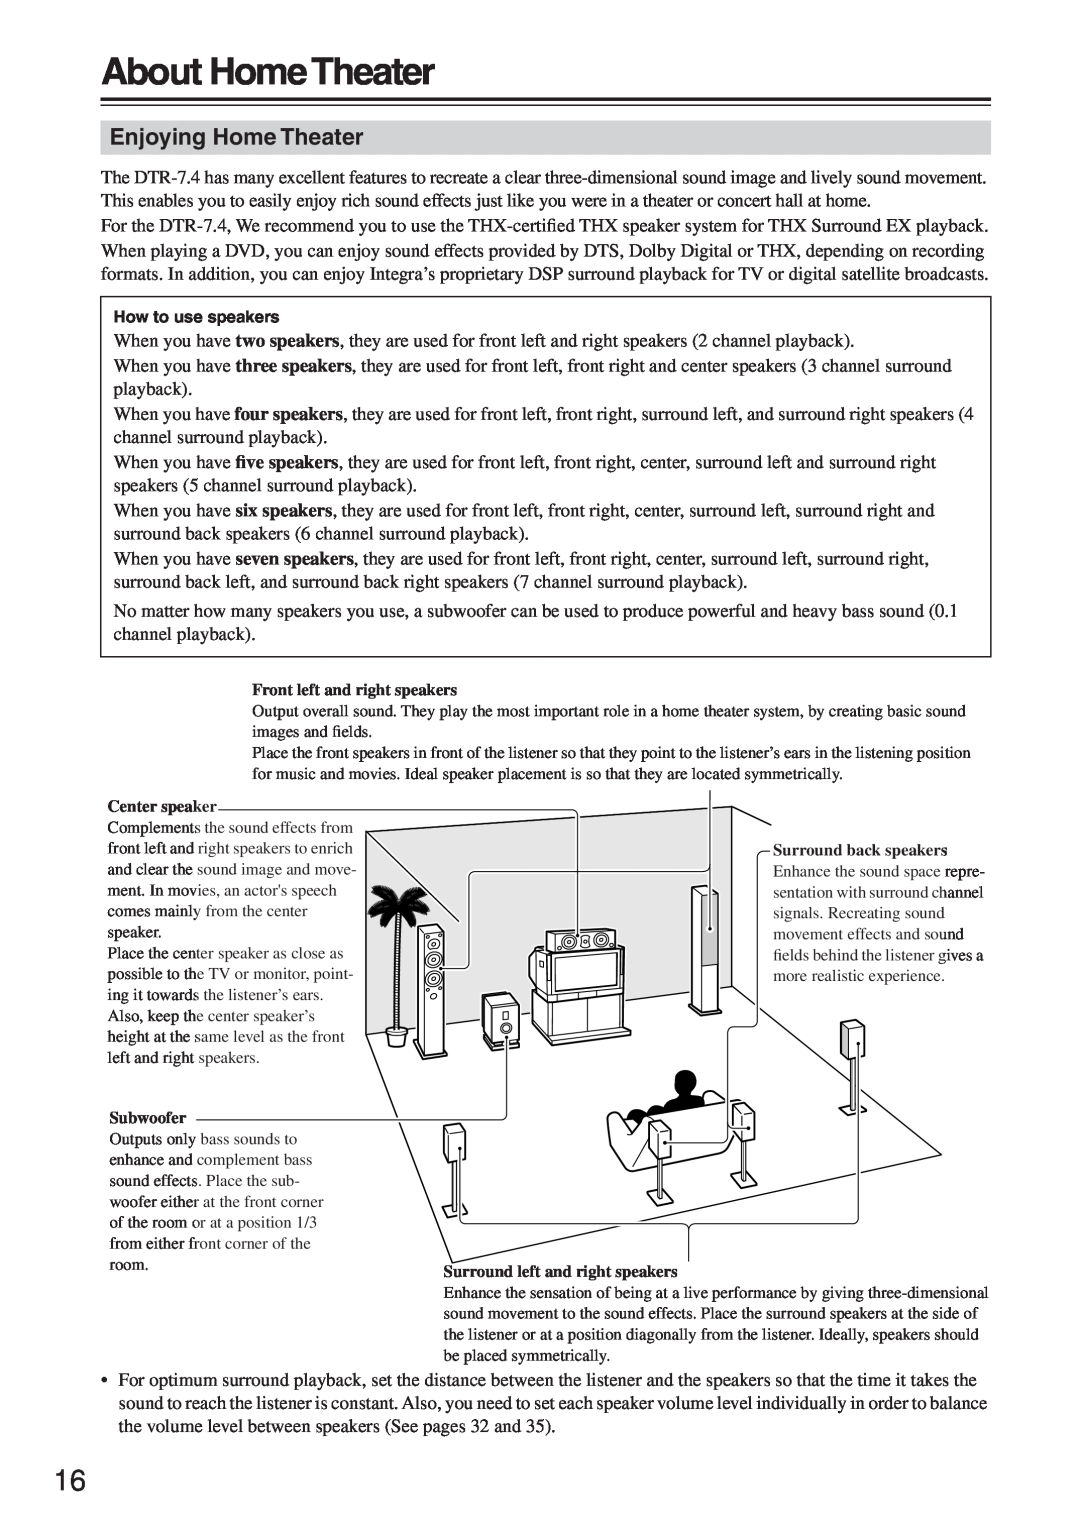 Integra DTR-7.4 instruction manual About HomeTheater, Enjoying Home Theater 